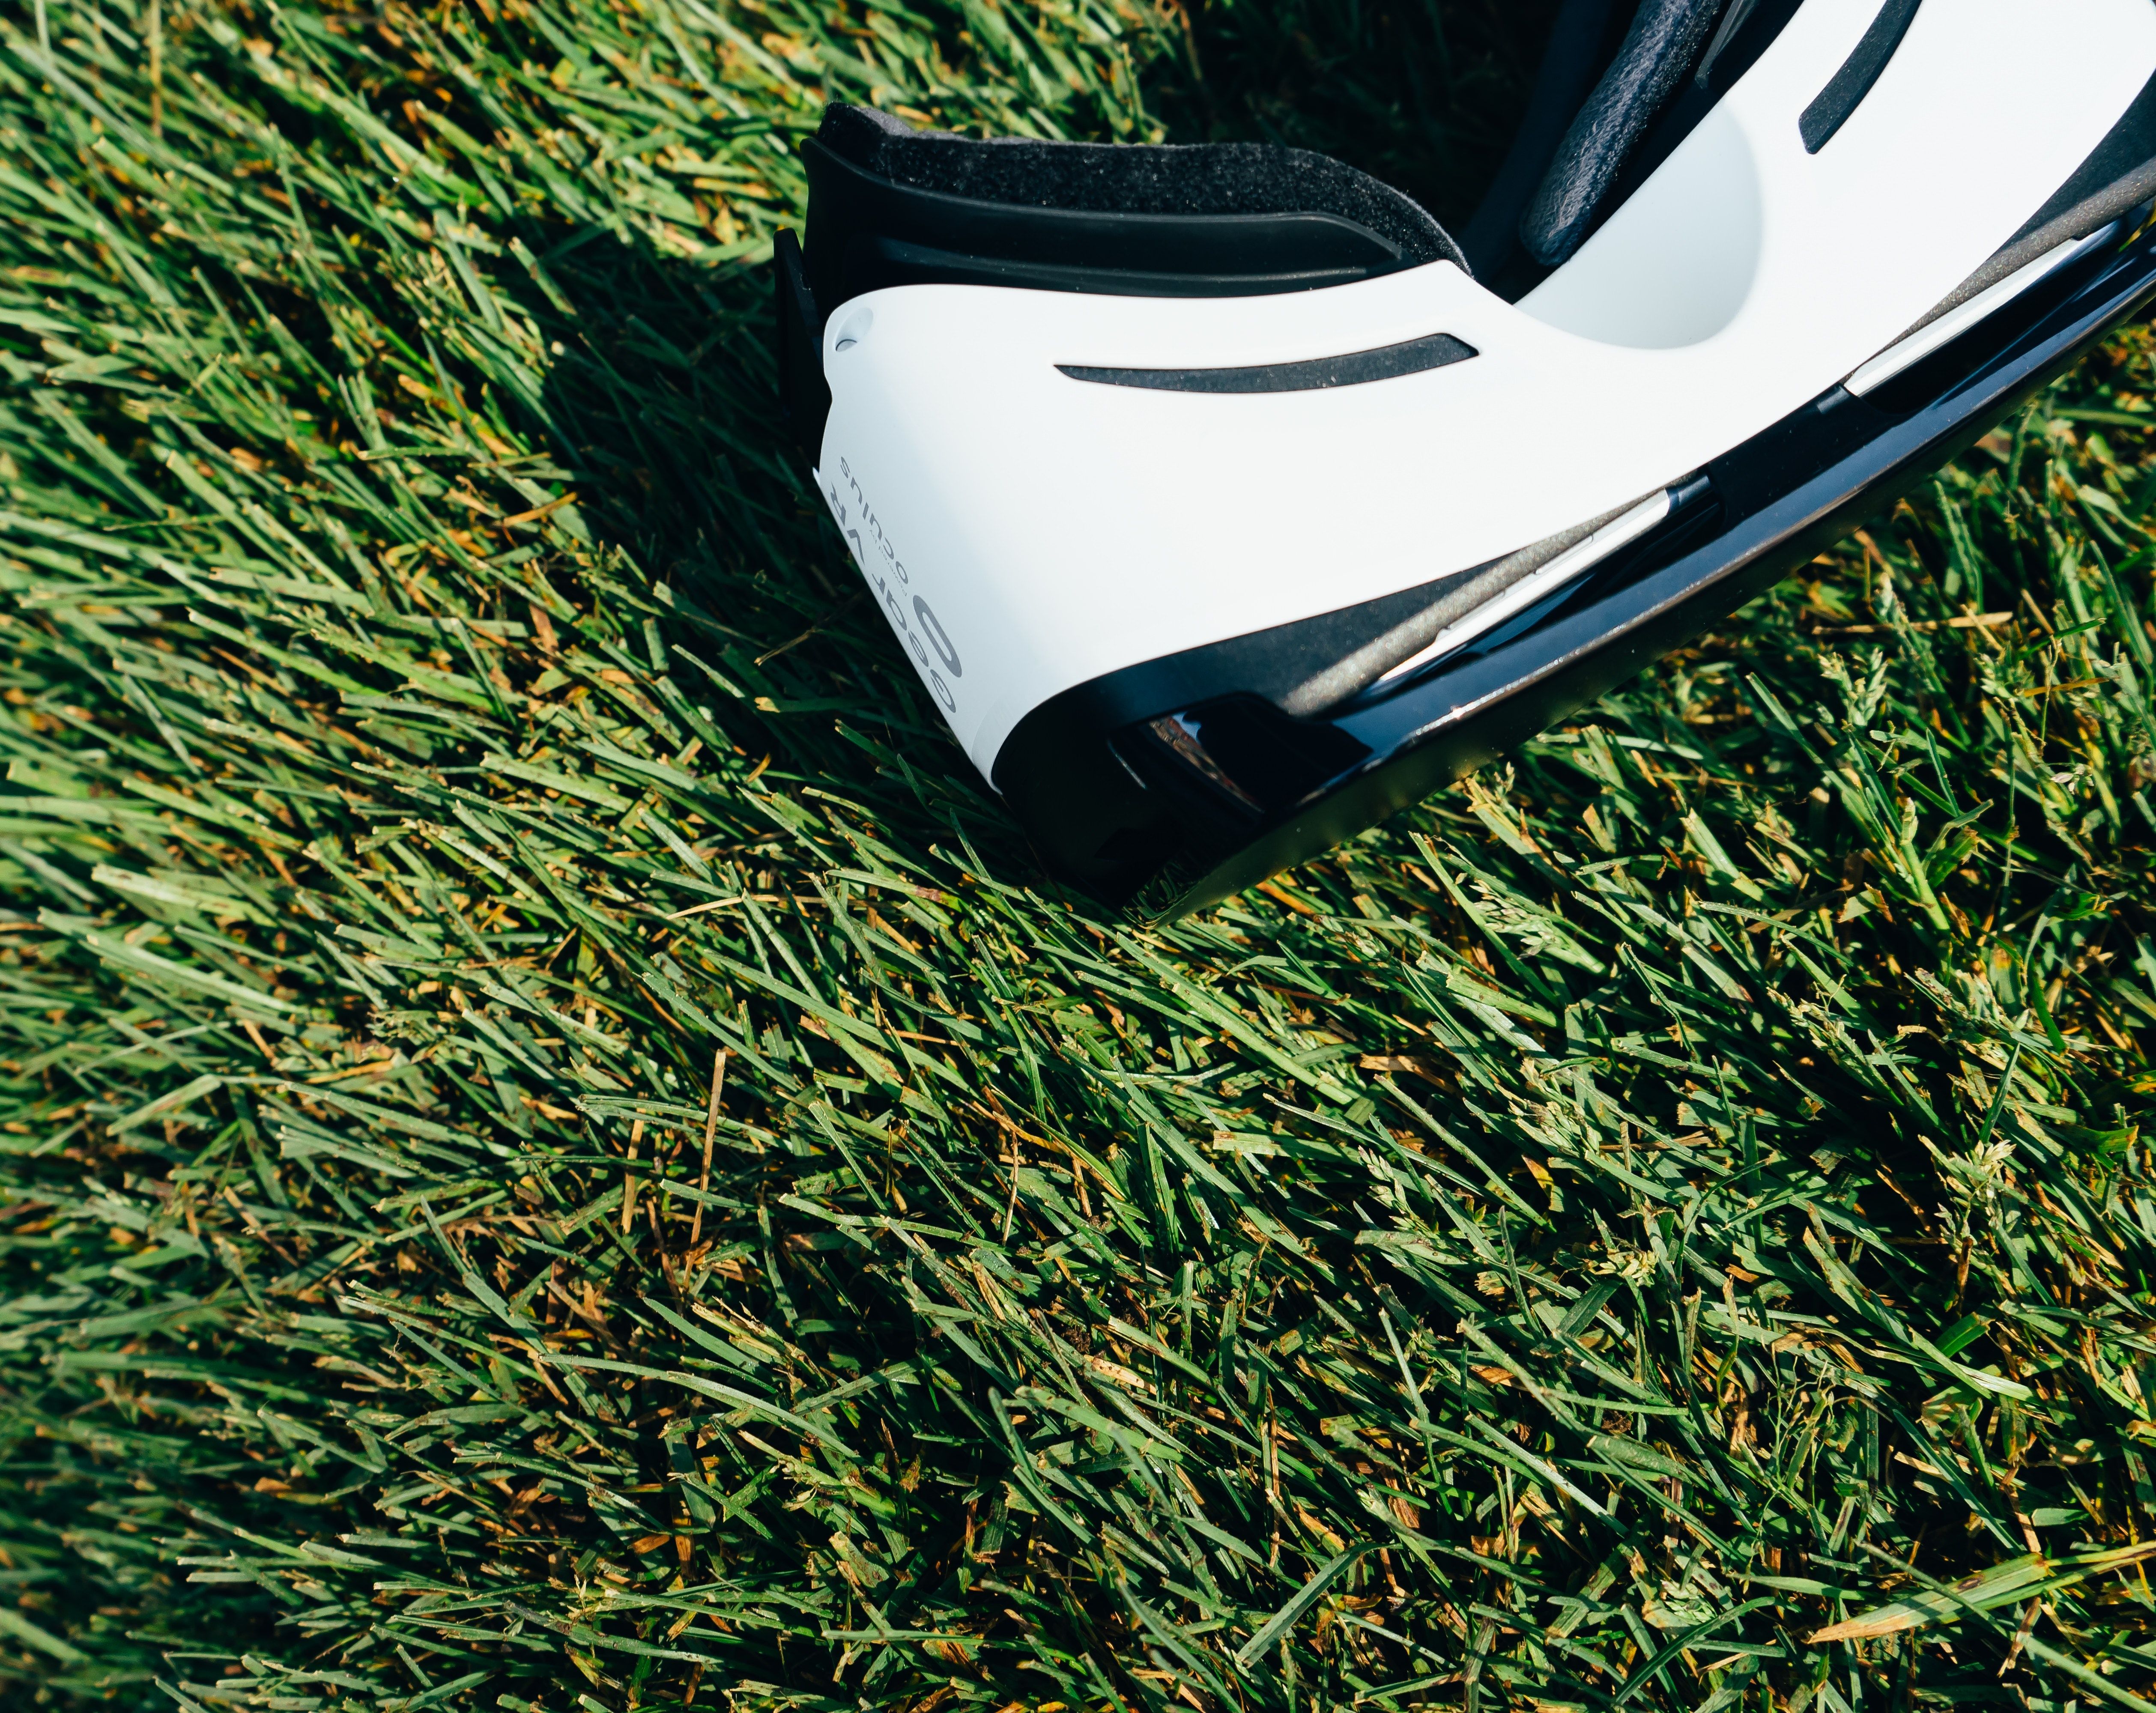 VR headset on grass